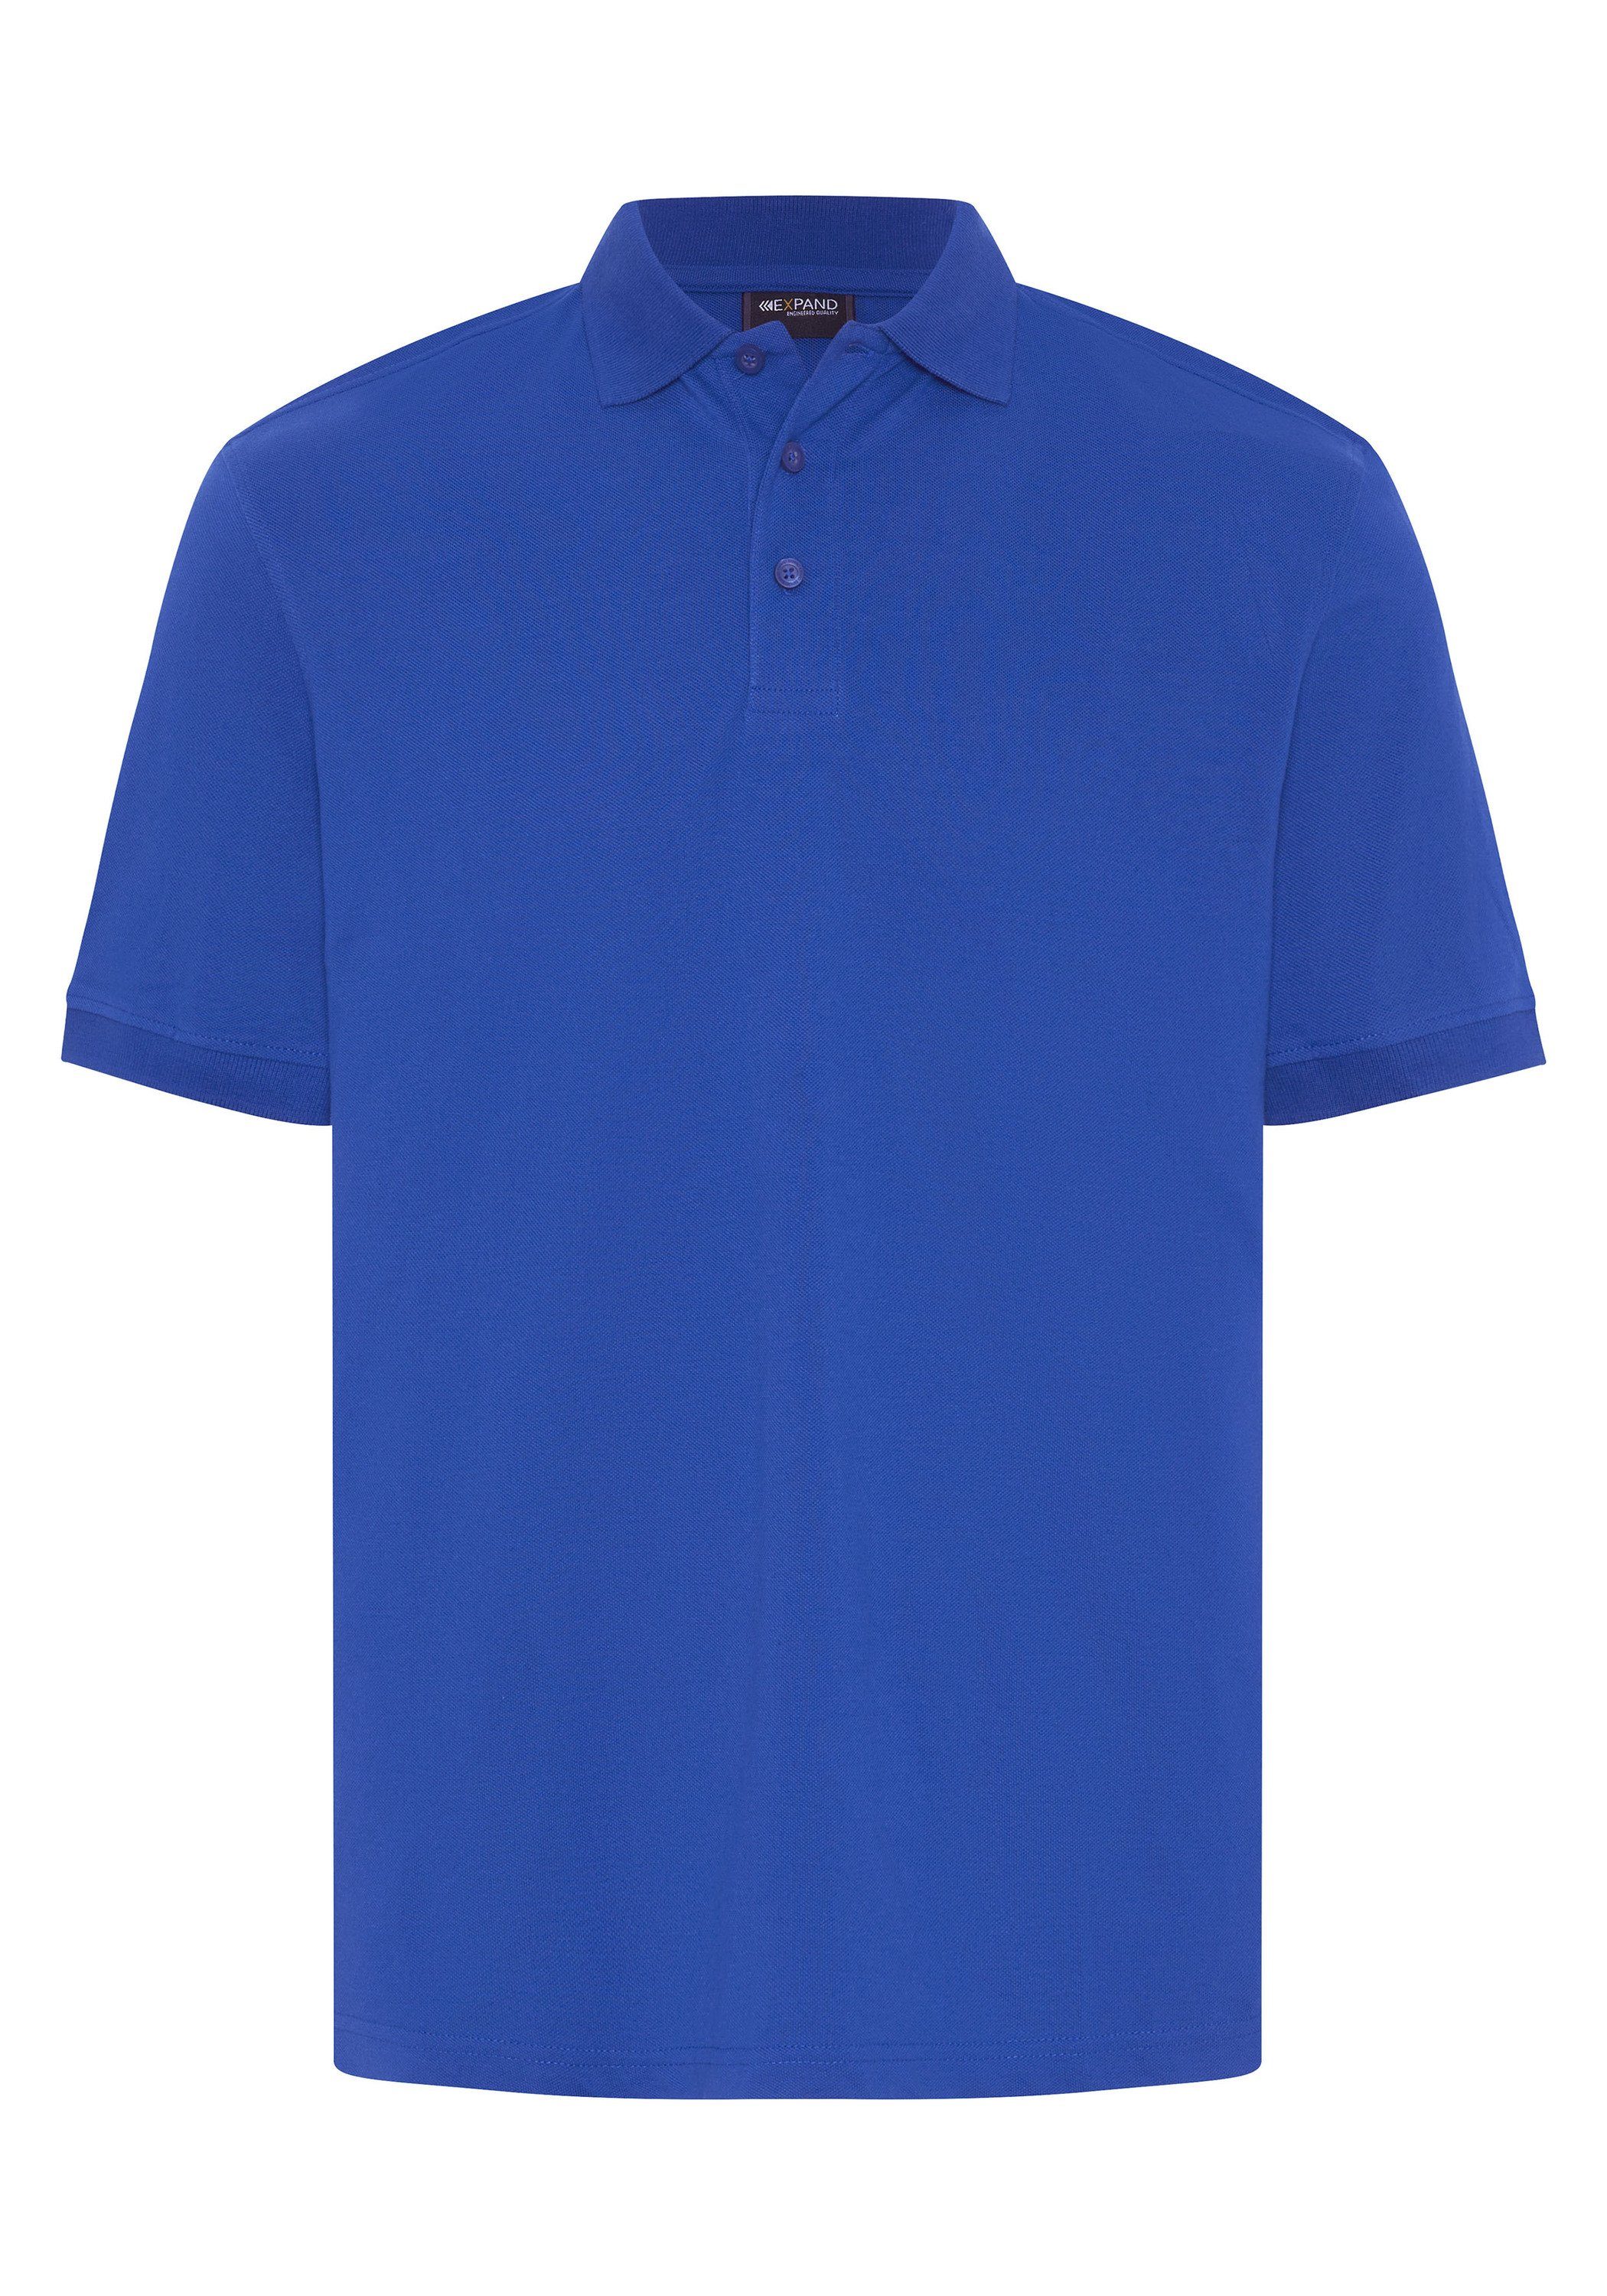 Expand Poloshirt strapazierfähig ultramarinblau